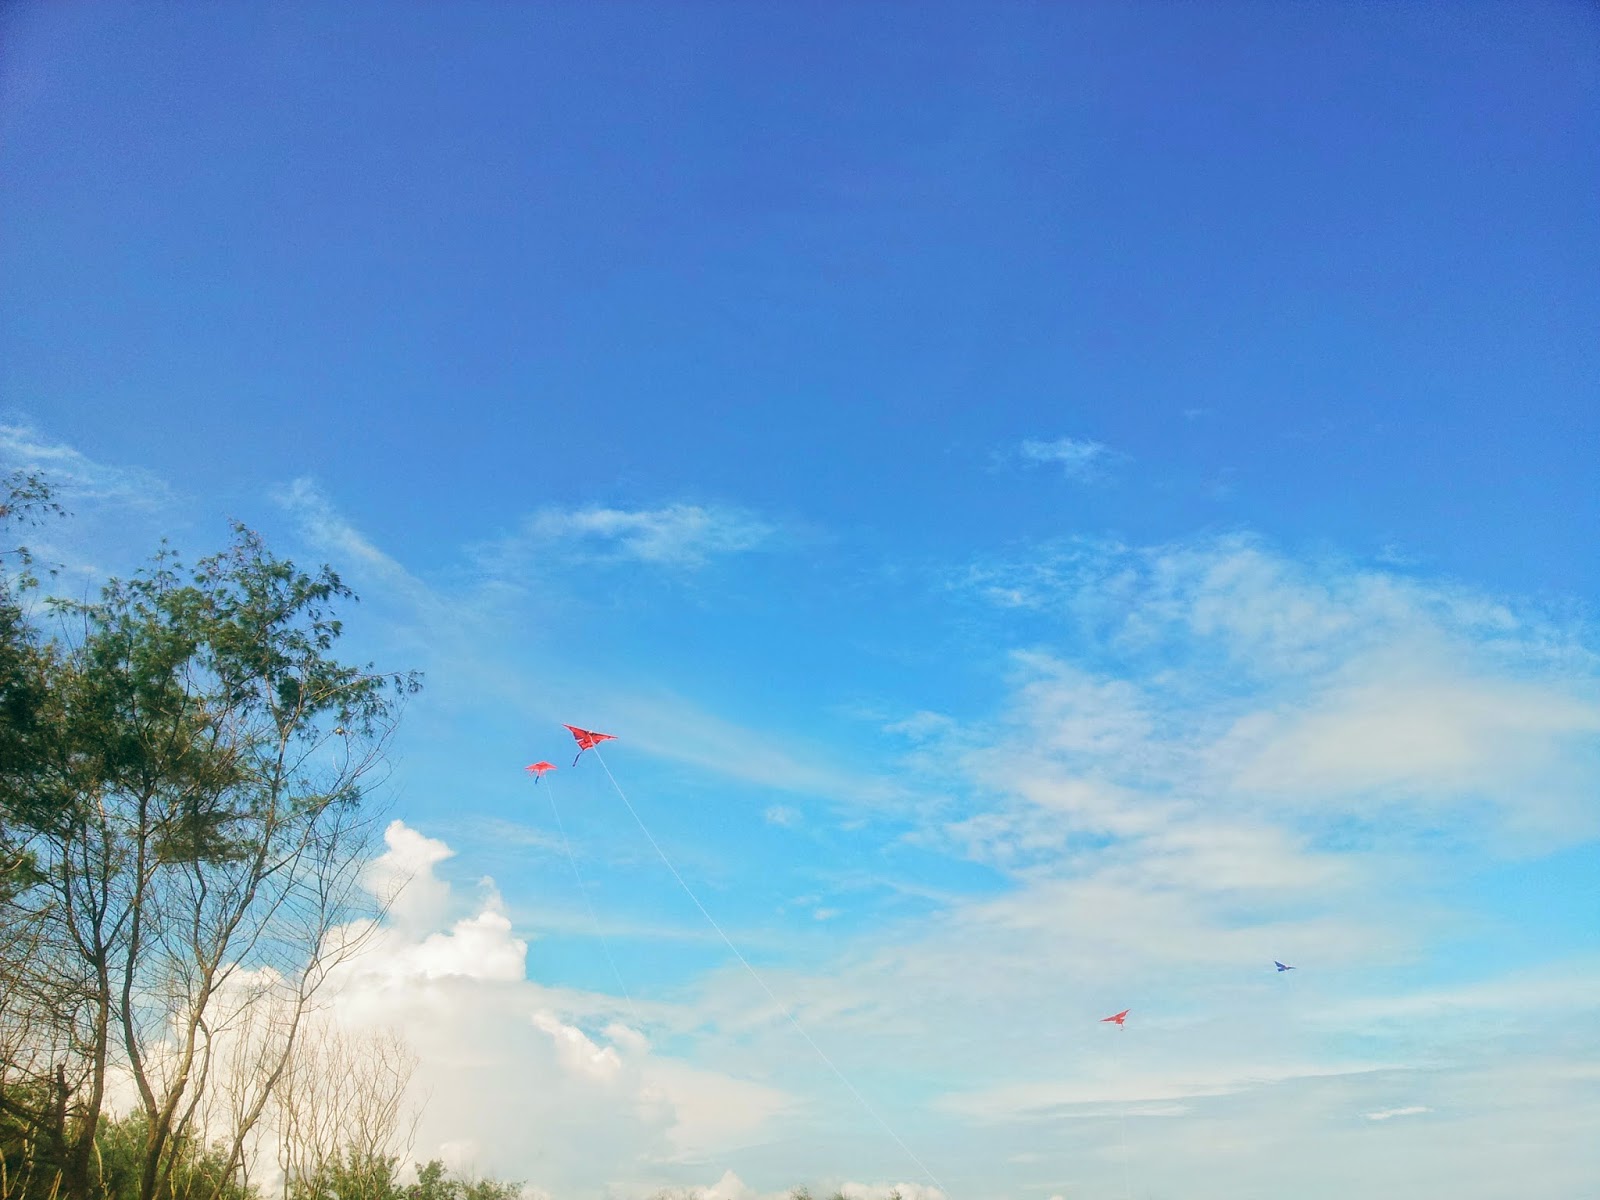 Kites on the sky of Kwaru the beach in Bantul, Jogja